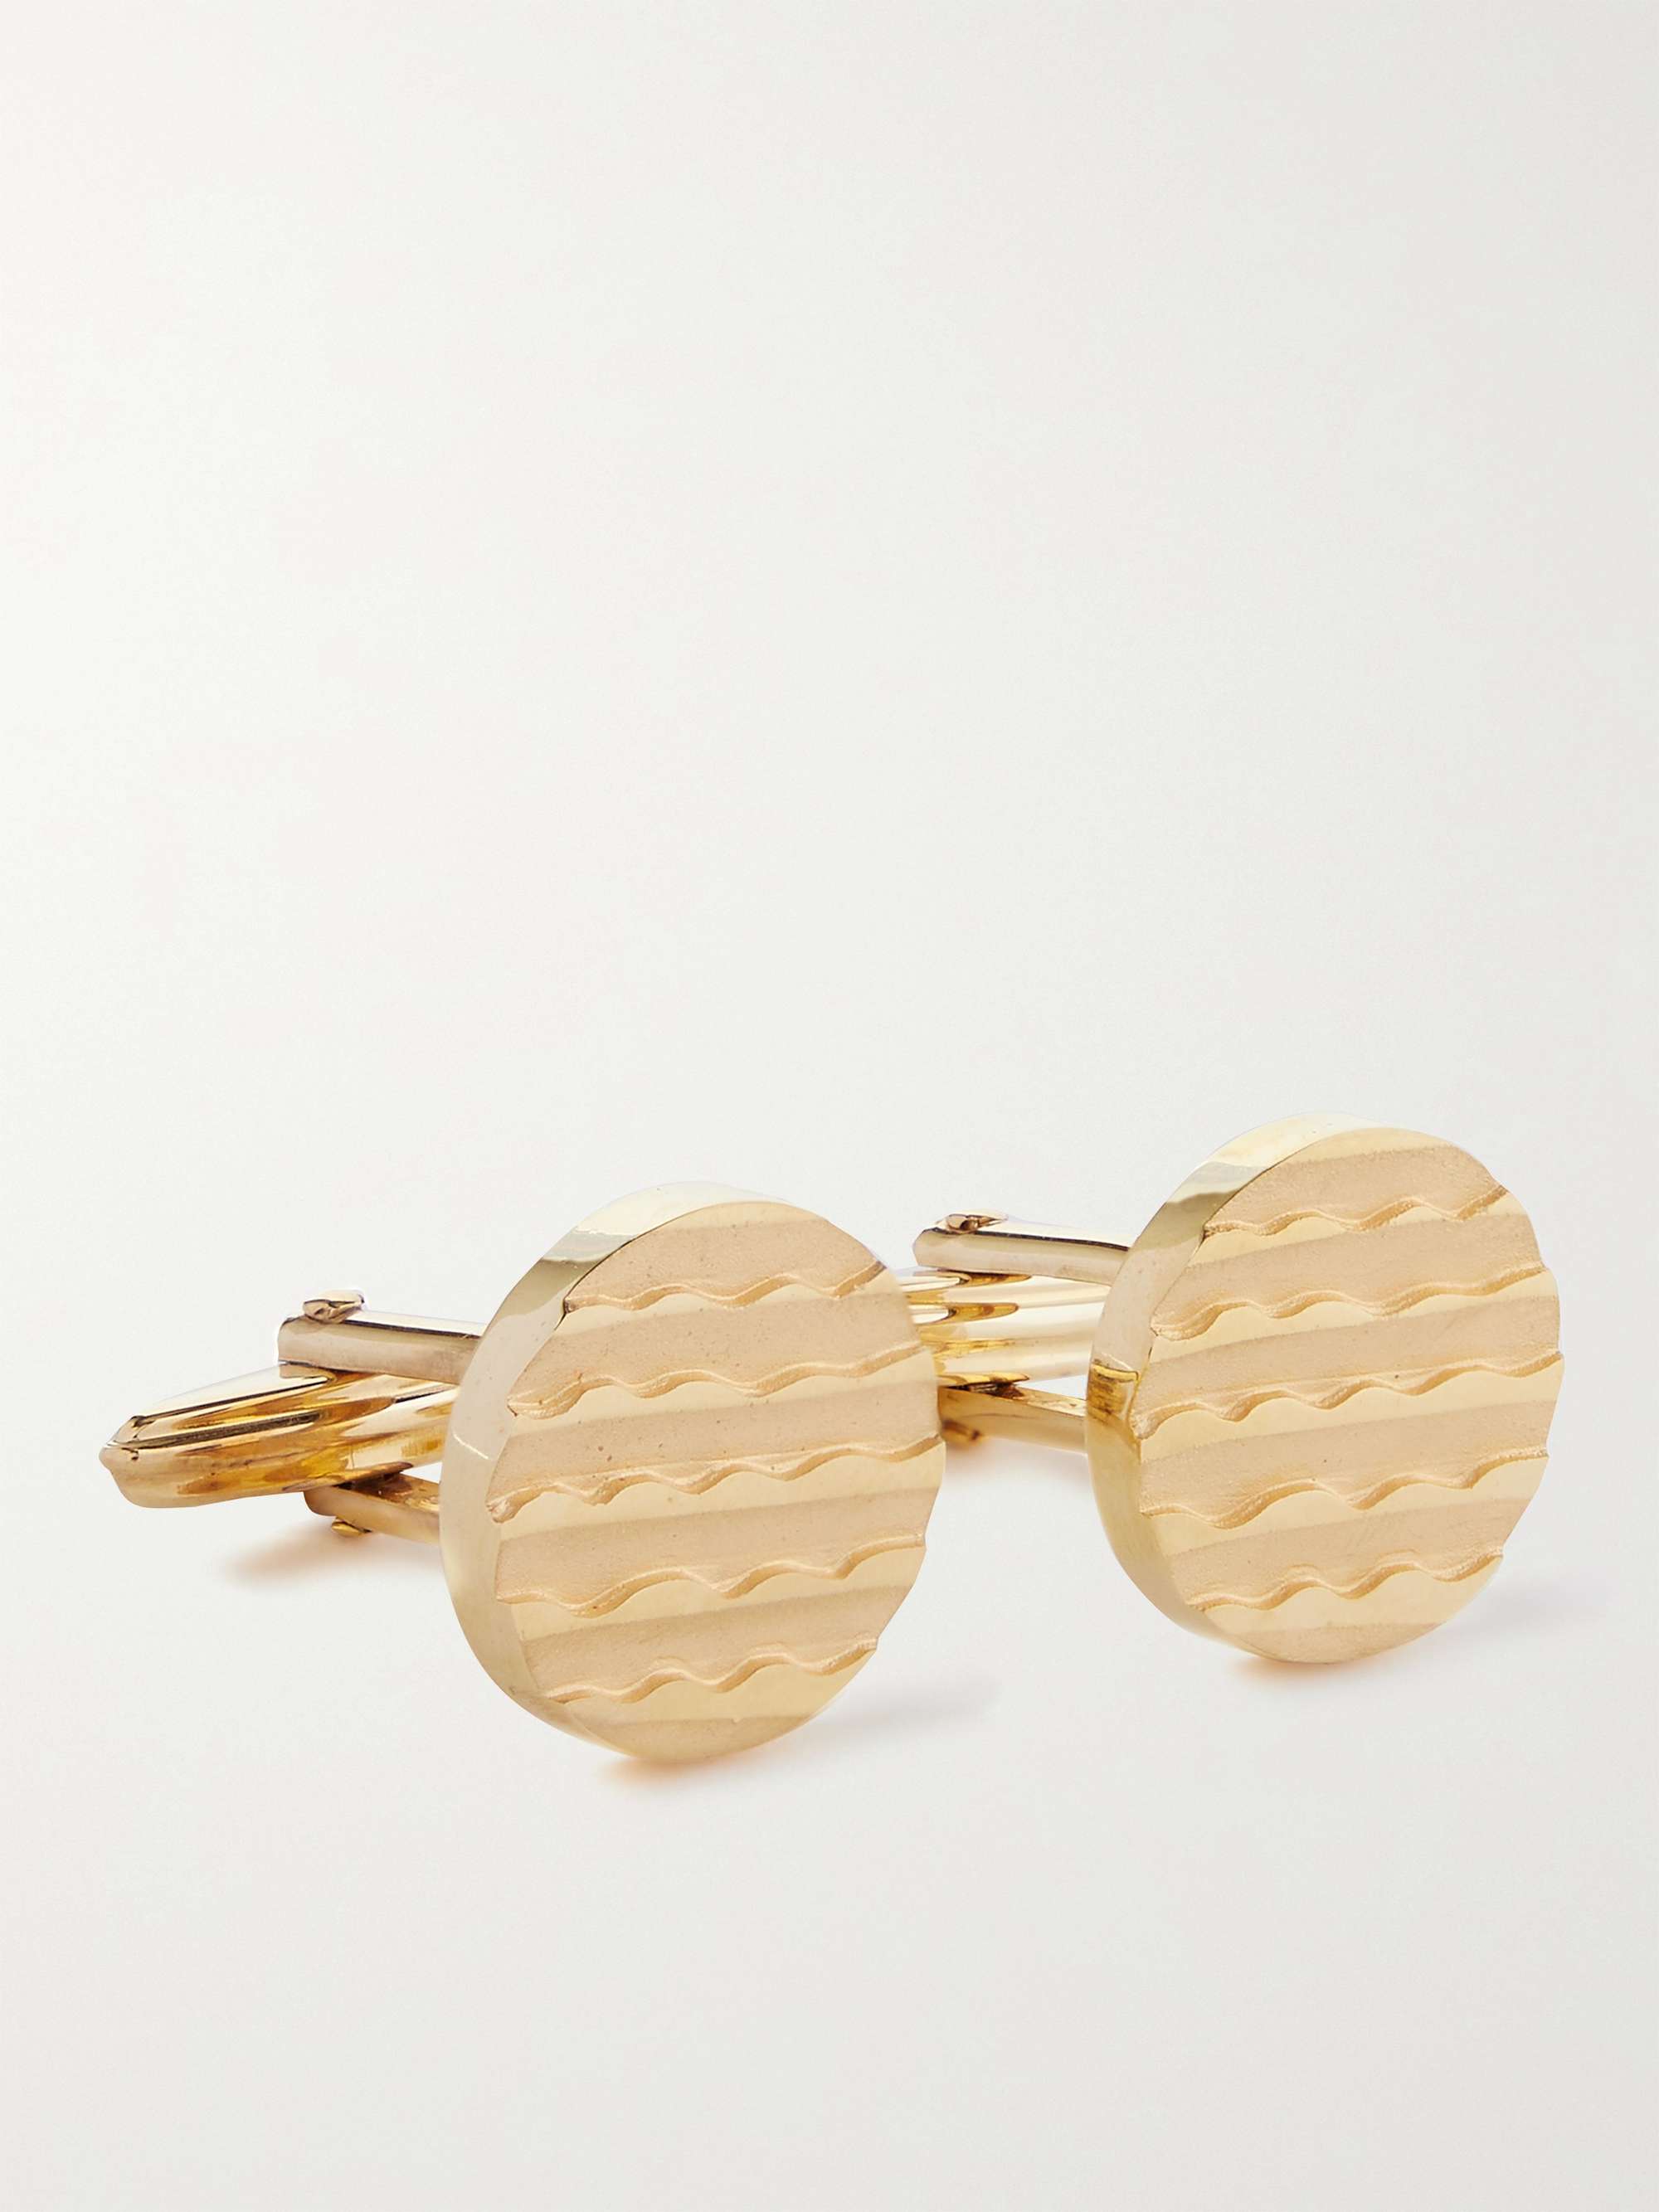 LANVIN Textured Gold-Plated Cufflinks